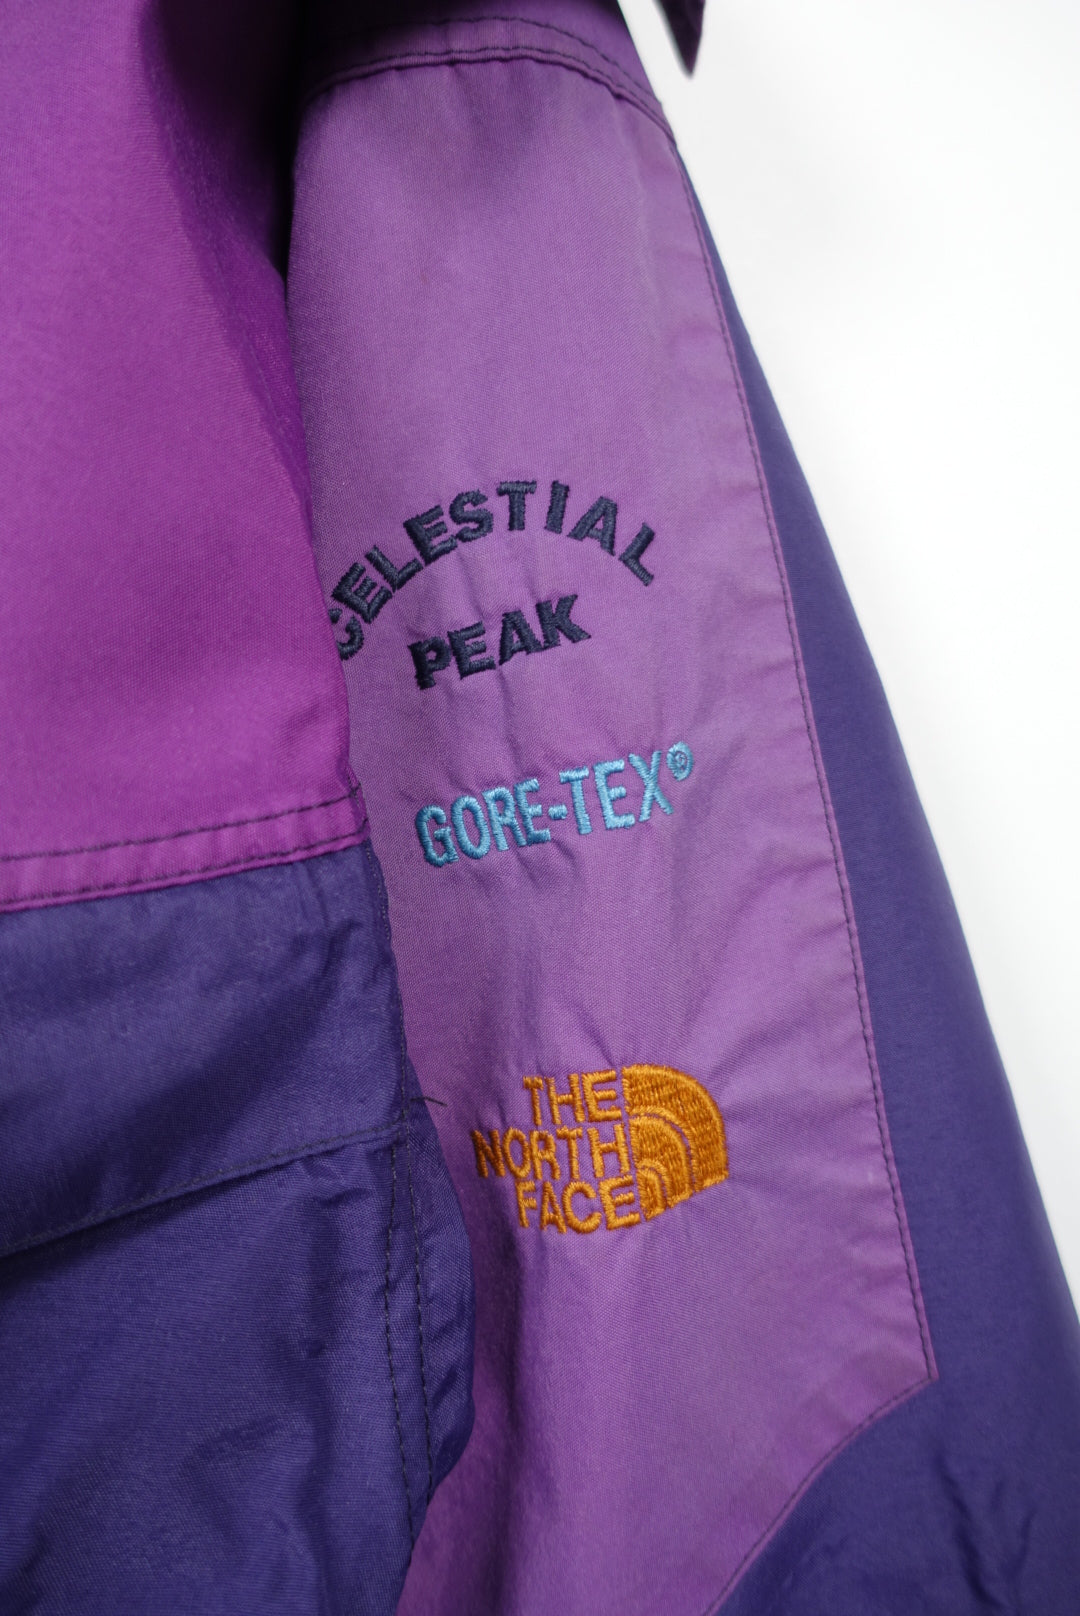 Vintage The North Face Celestial Peak Goretex Jacket